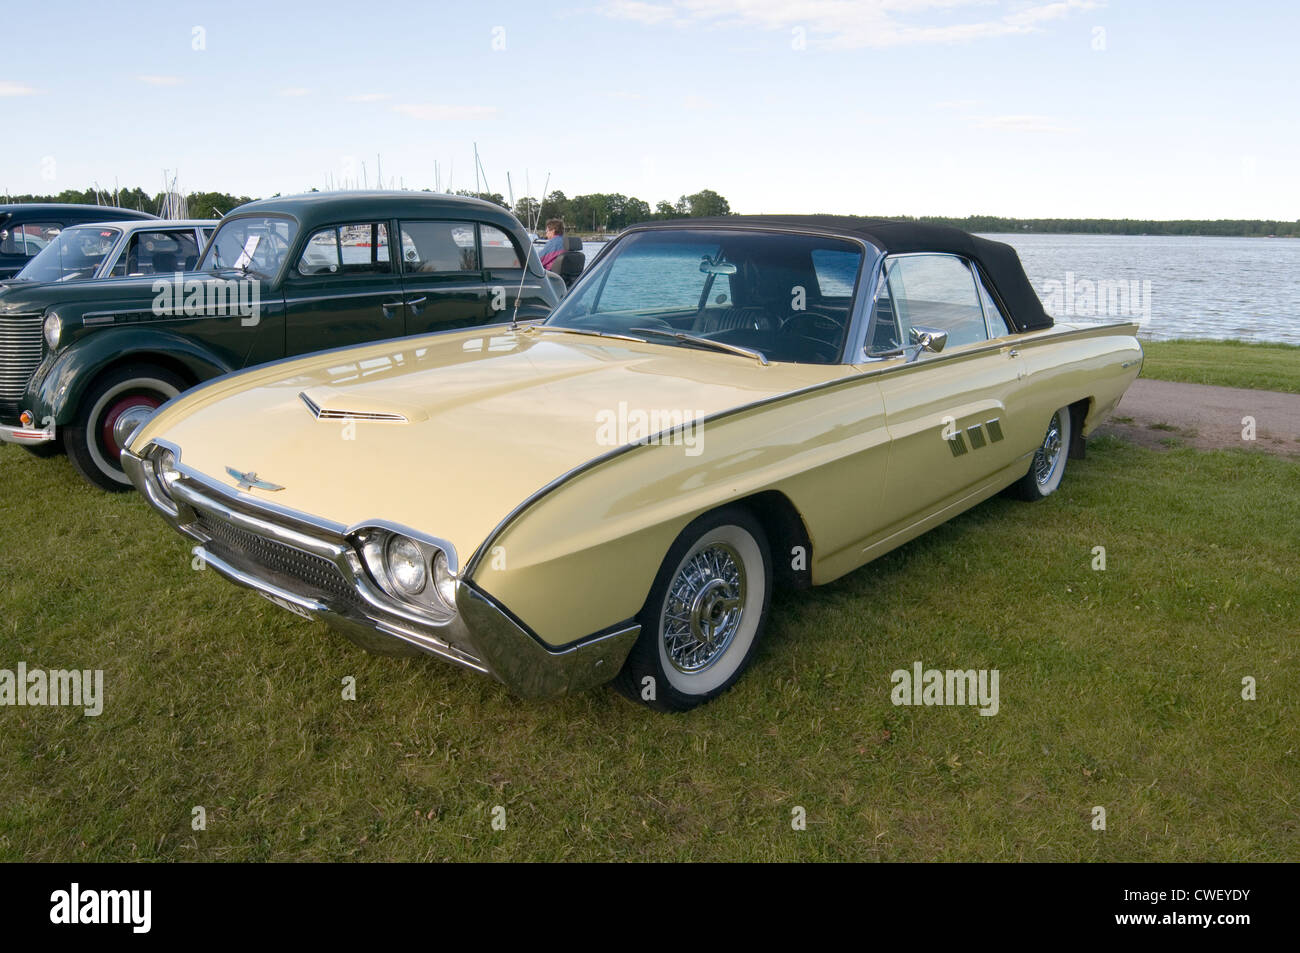 1963 ford thunderbird classic car cars Stock Photo